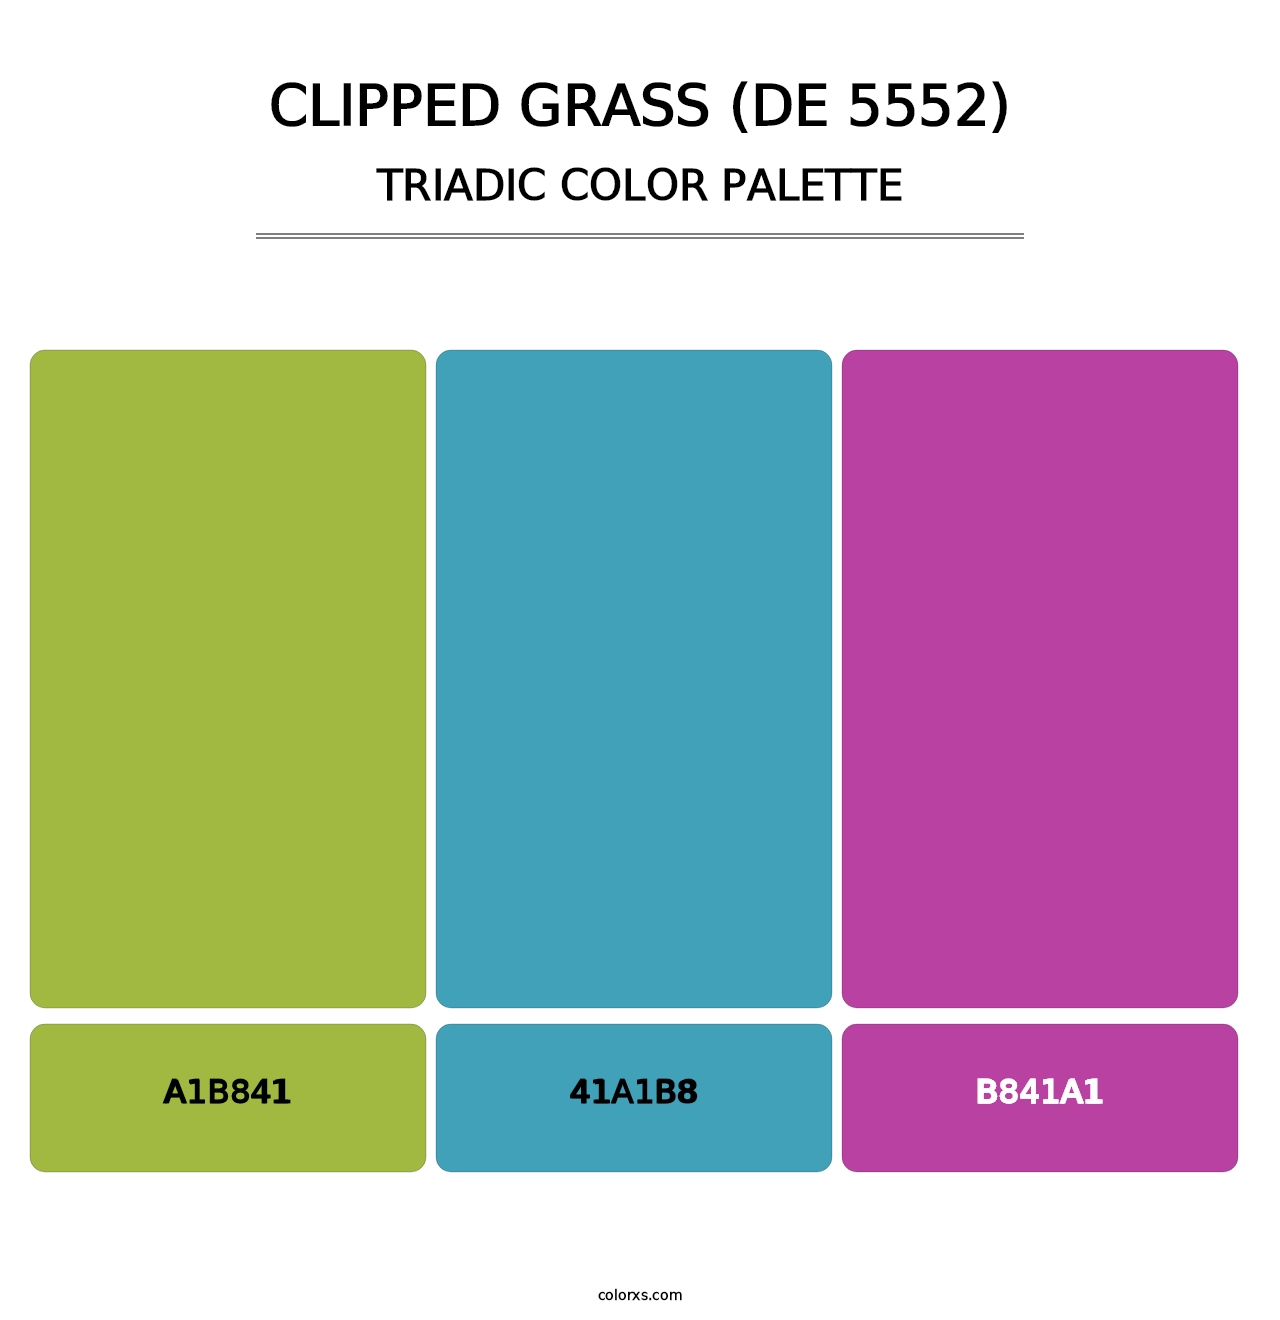 Clipped Grass (DE 5552) - Triadic Color Palette